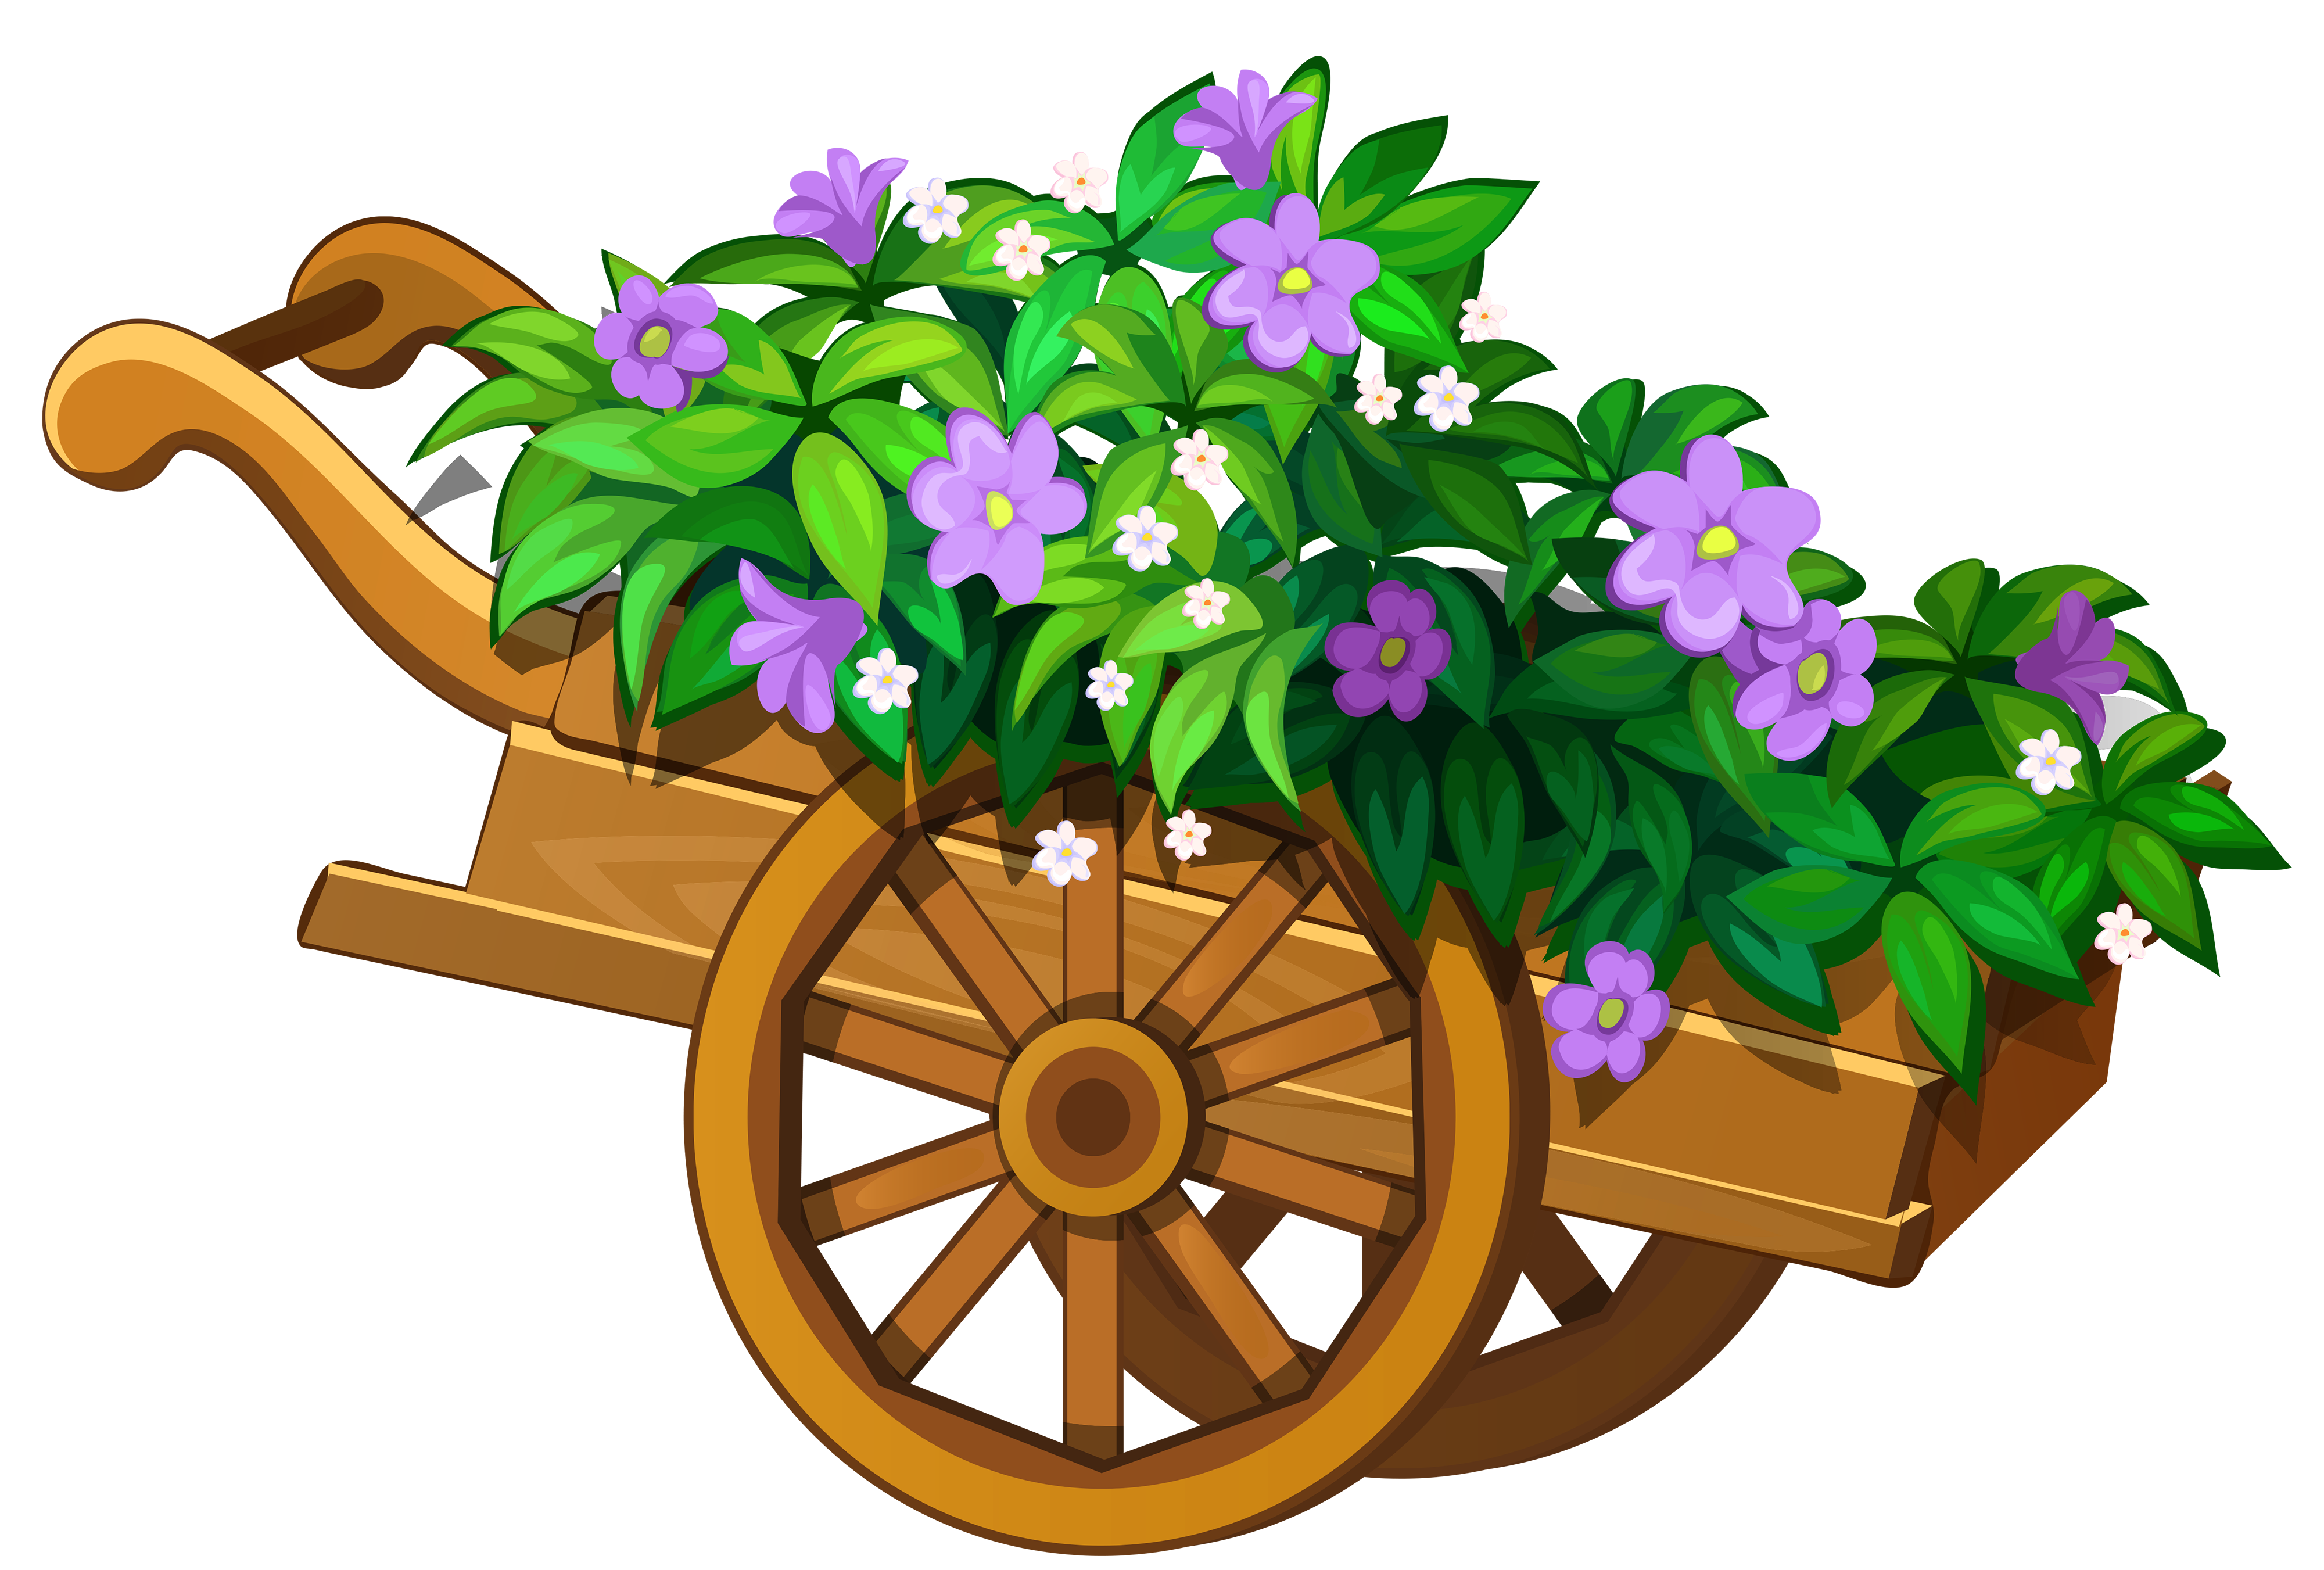 Wagon clipart wood cart. Wooden garden wheelbarrow with